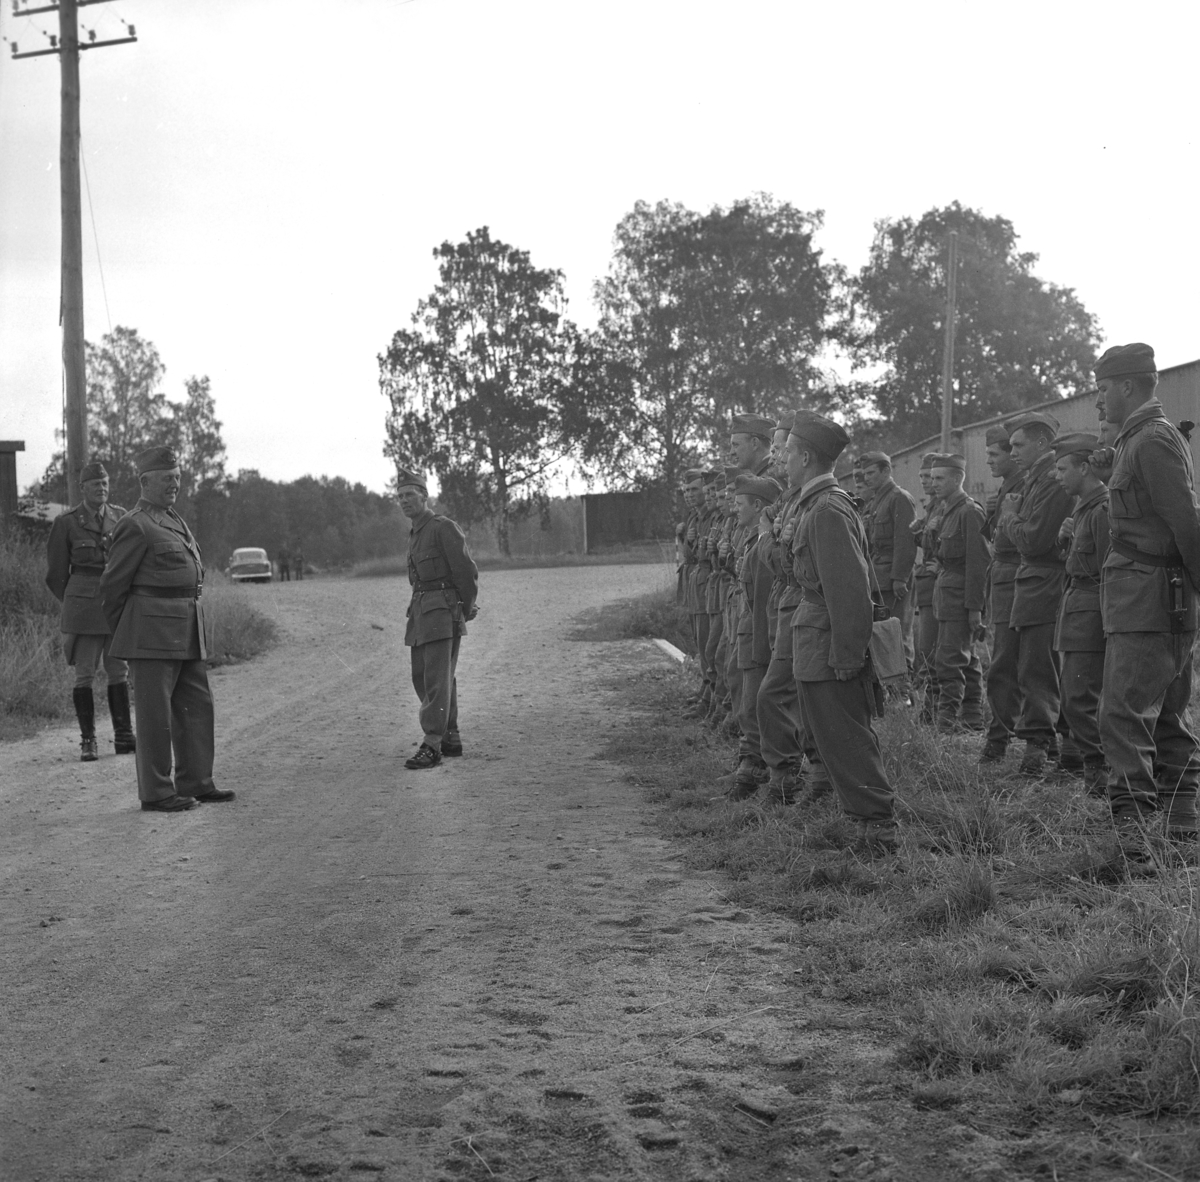 General på I3.
12 september 1955.